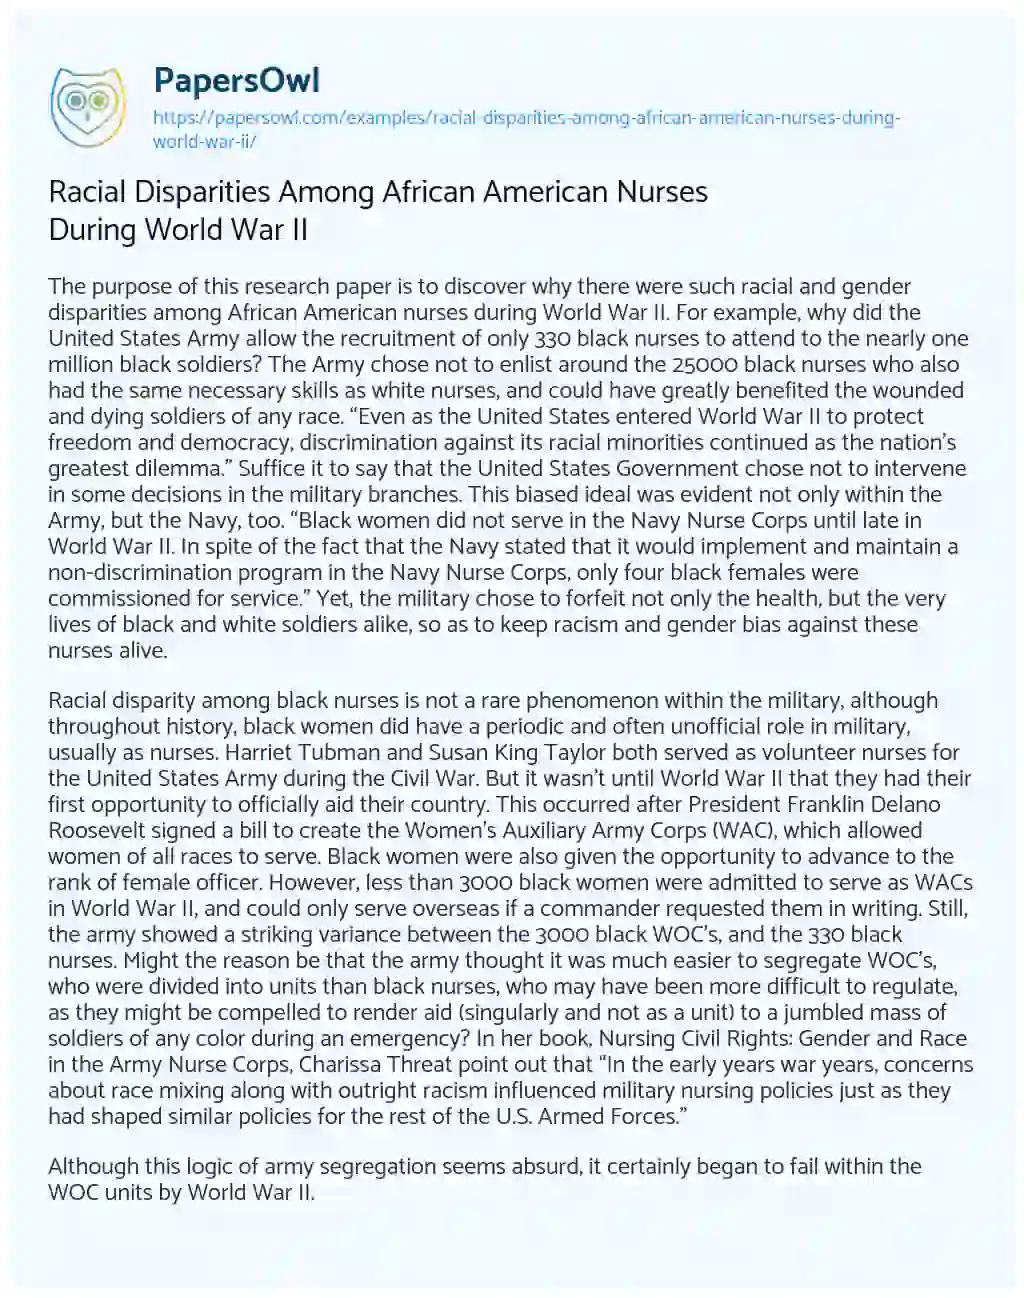 Racial Disparities Among African American Nurses during World War II essay